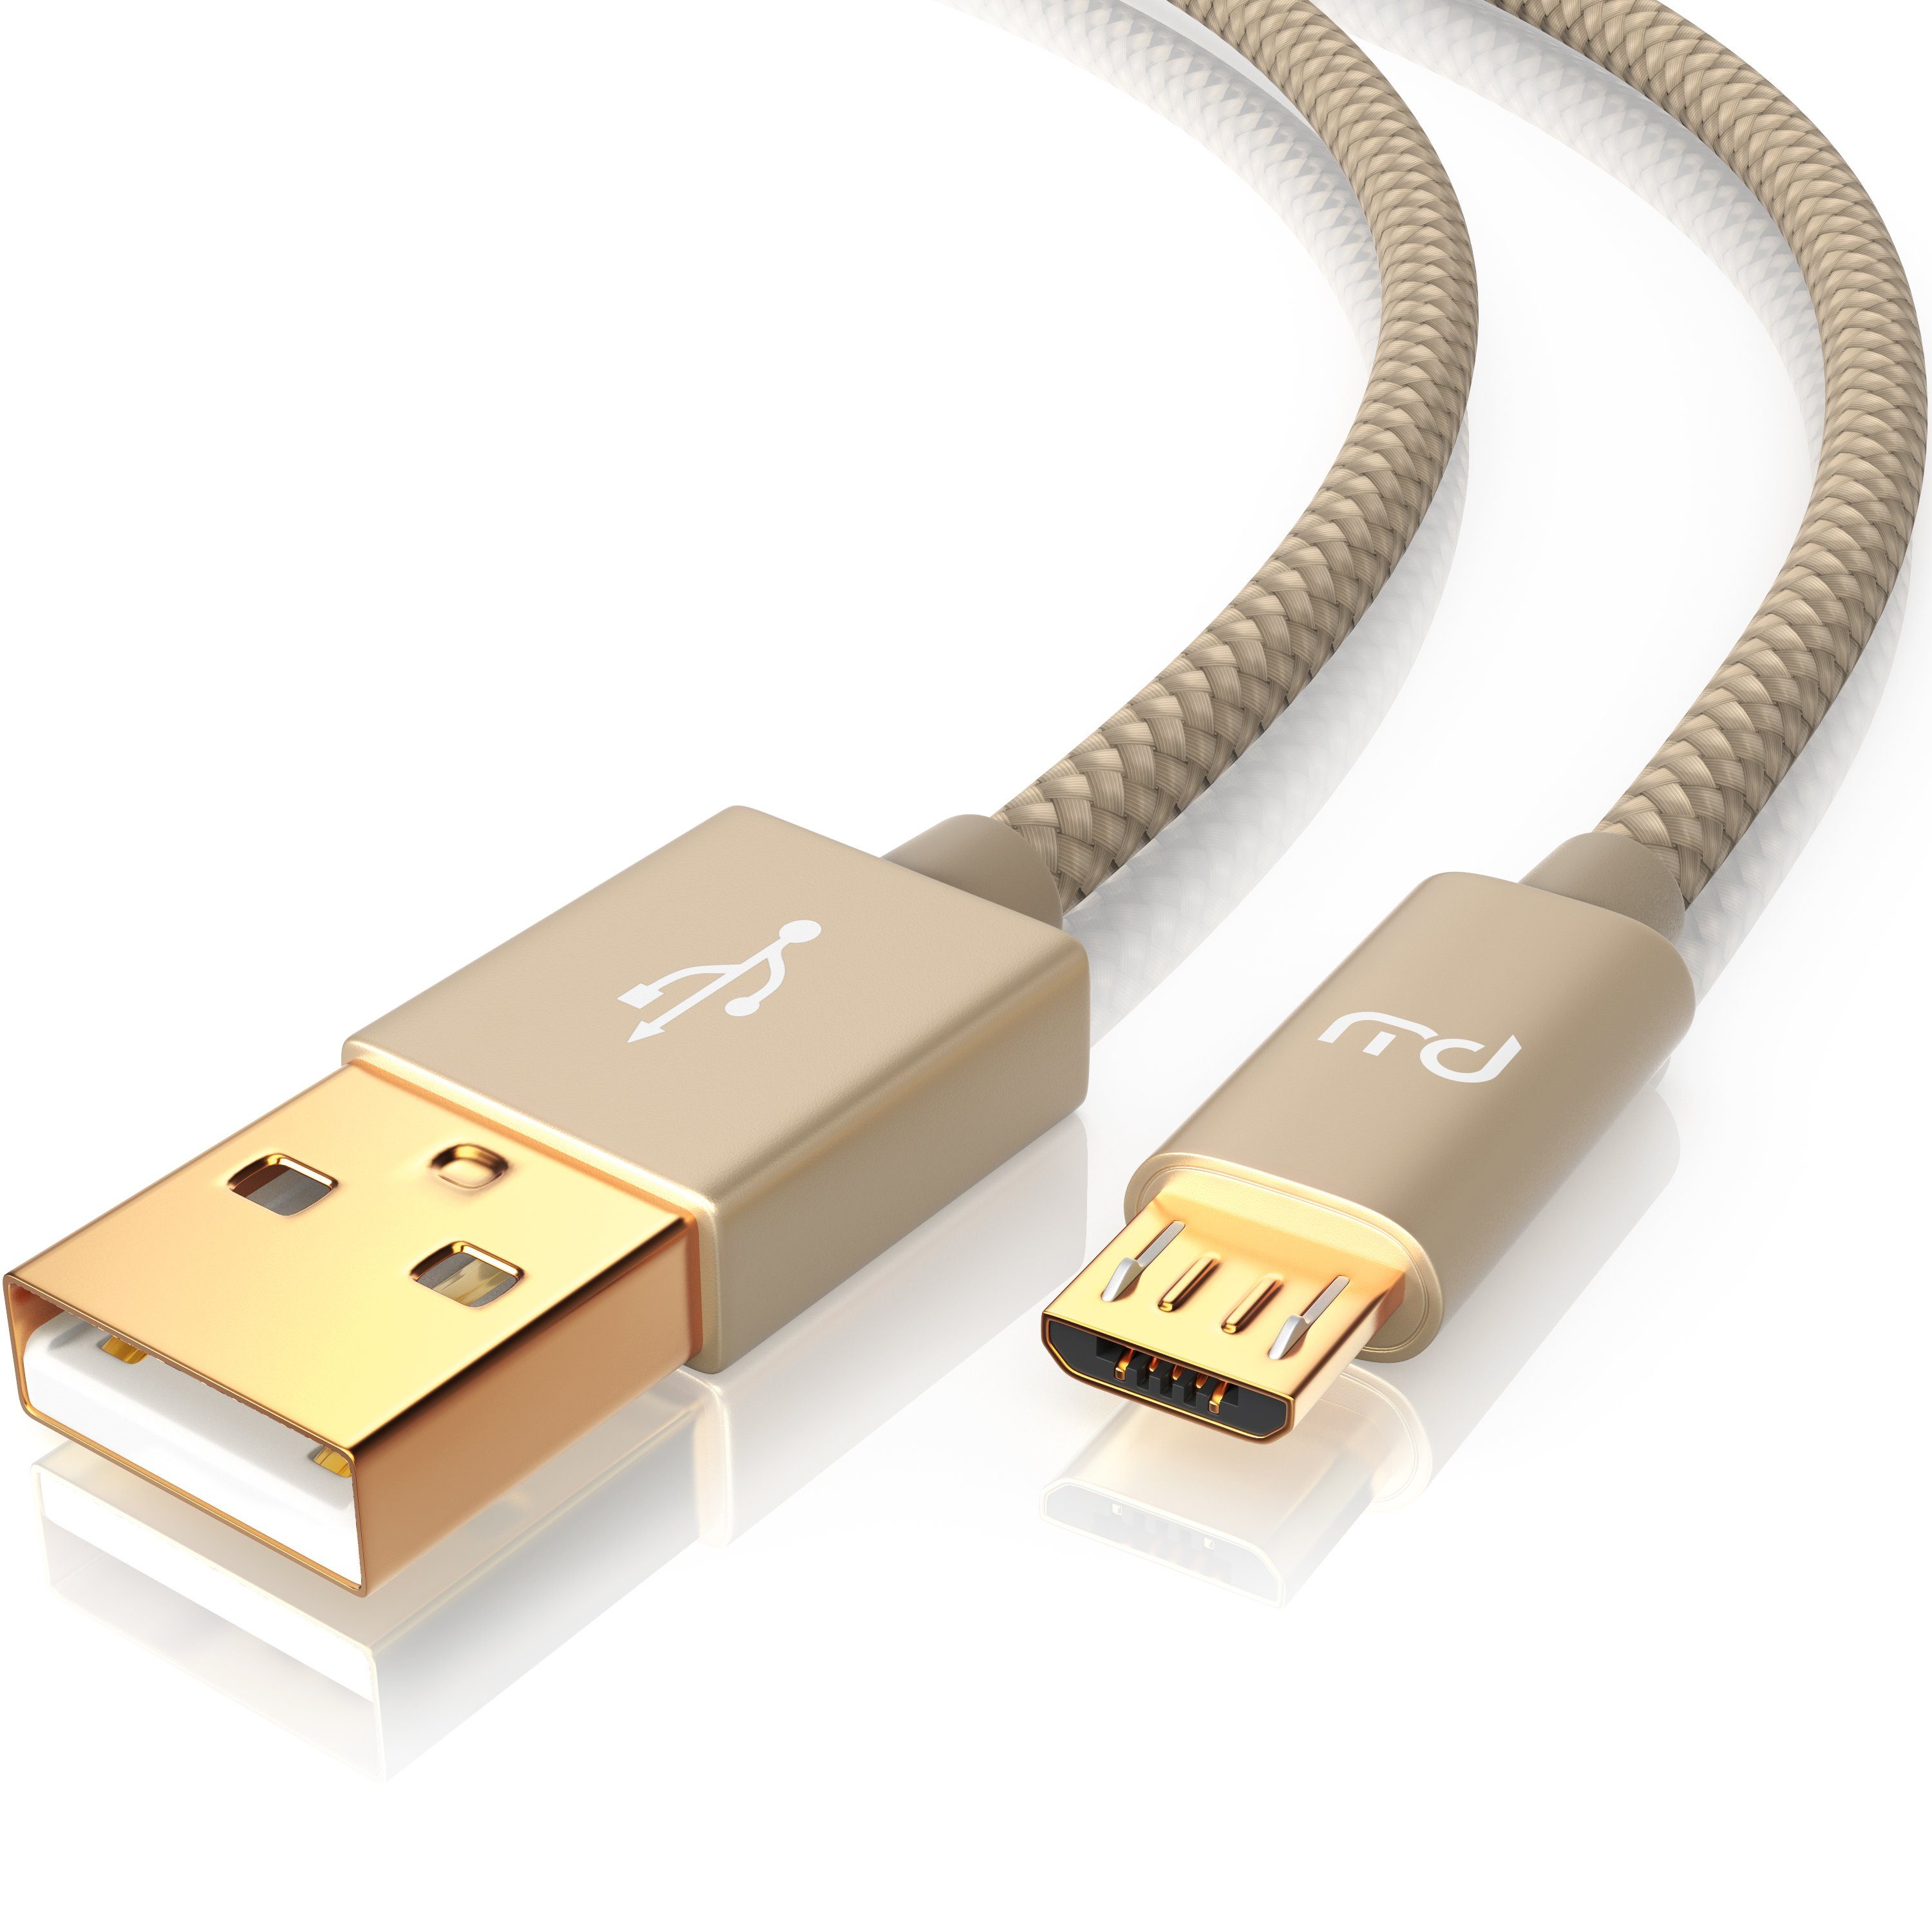 Primewire USB-Kabel, 2.0, Micro-USB (200 cm), 2,4A MicroUSB  Schnellladekabel, Nylon, Metallstecker, Datenkabel - 2m